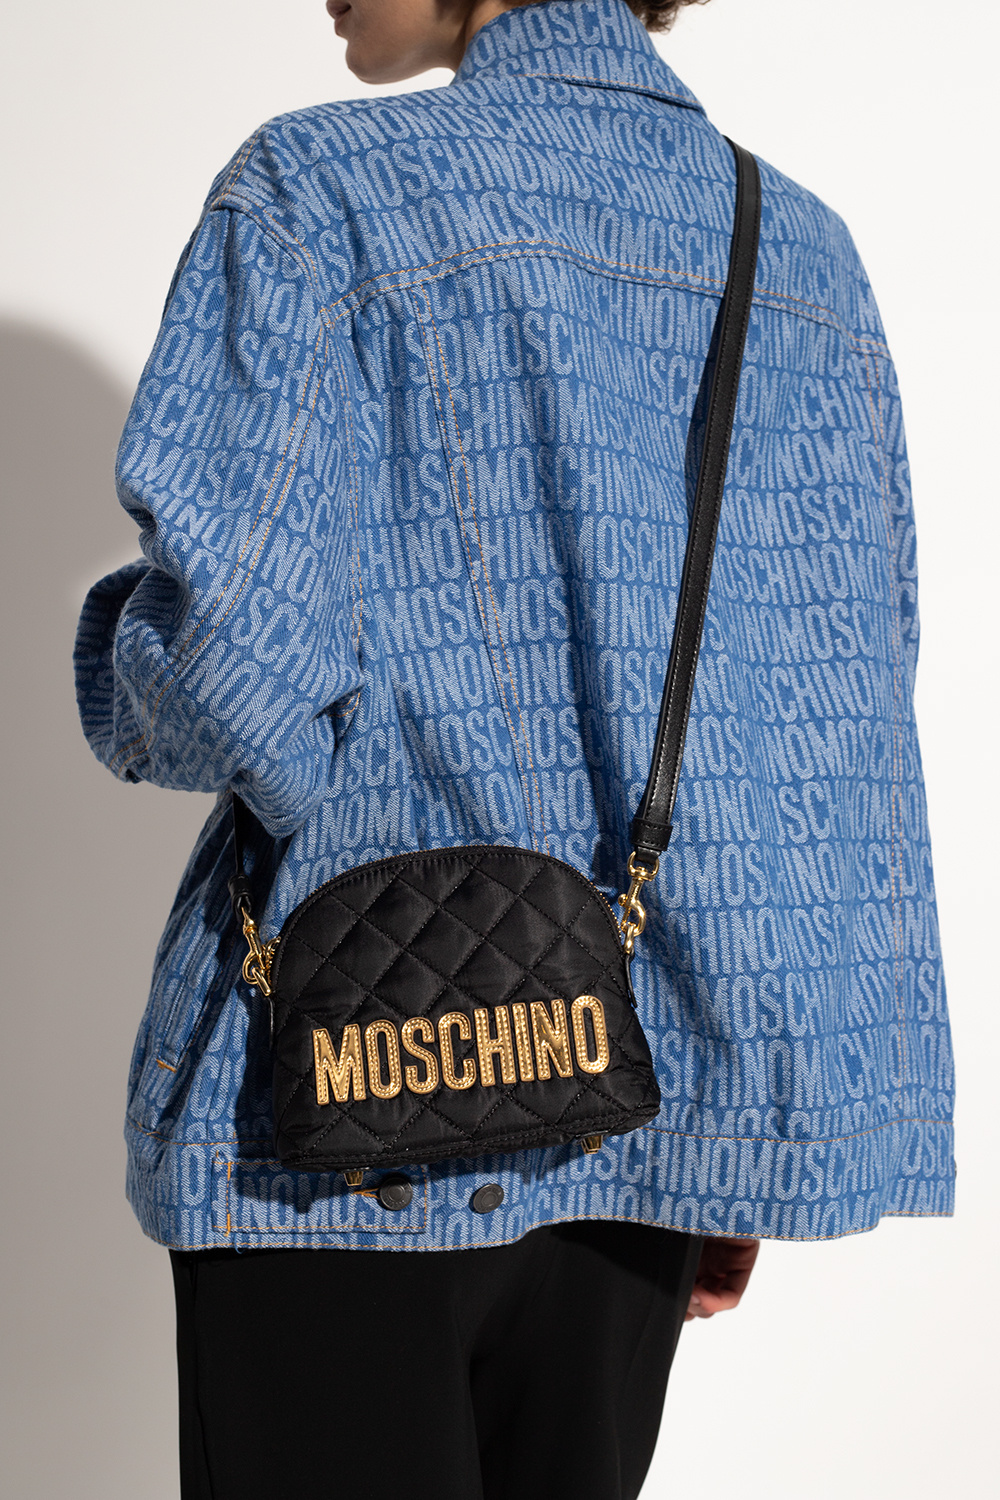 Black Shoulder bag with logo Moschino - Vitkac France